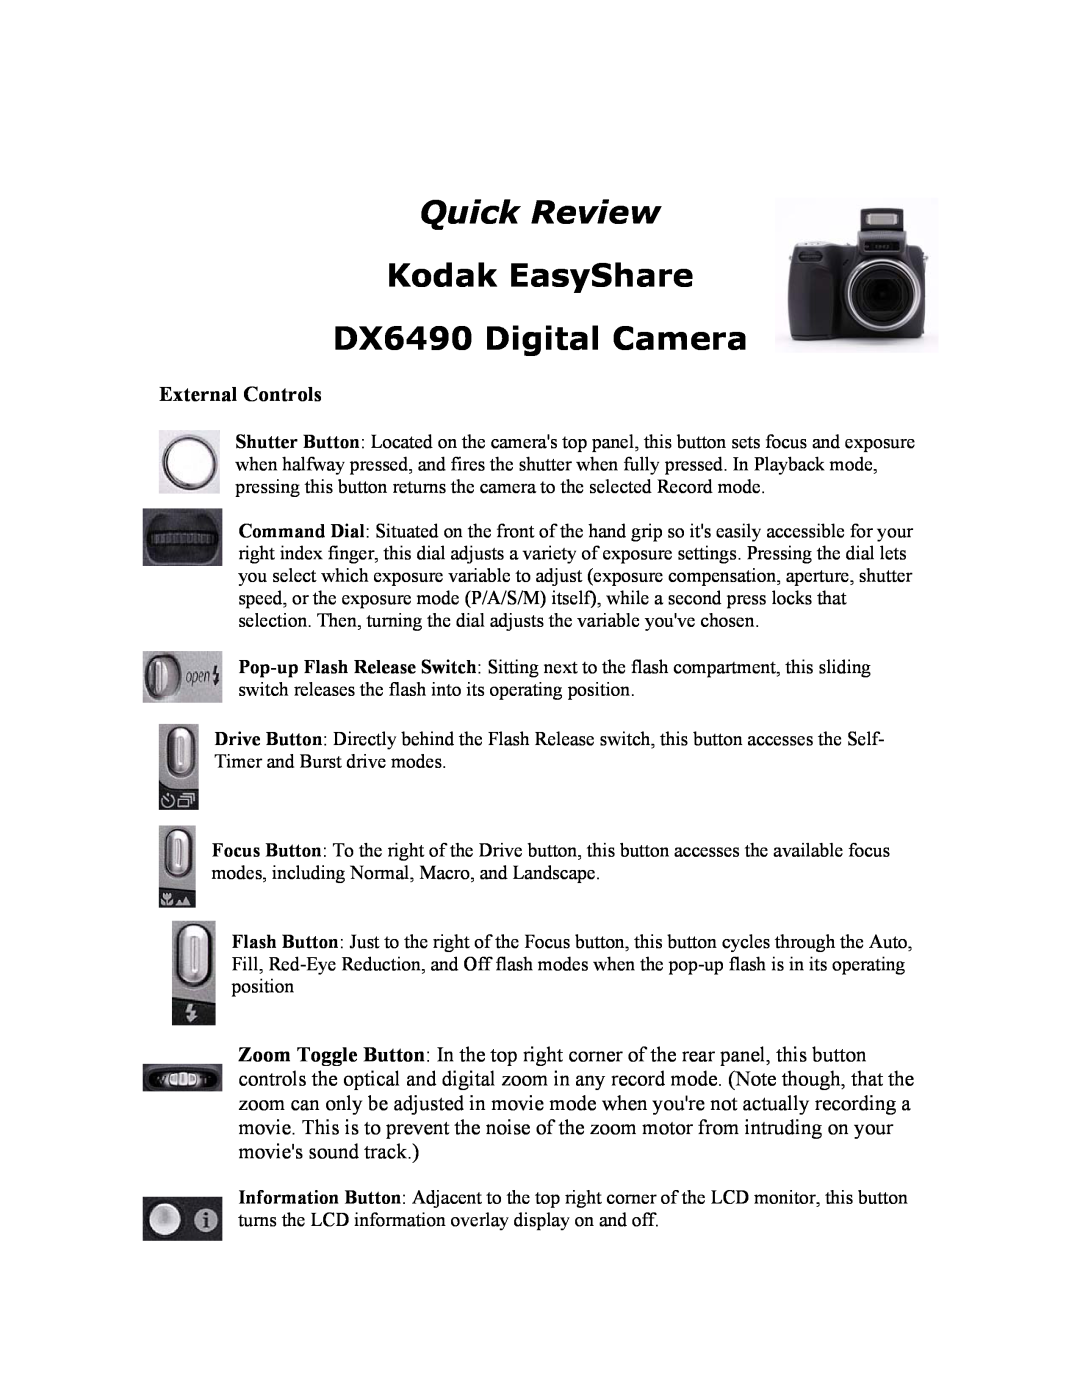 Kodak manual External Controls, Quick Review, Kodak EasyShare DX6490 Digital Camera 